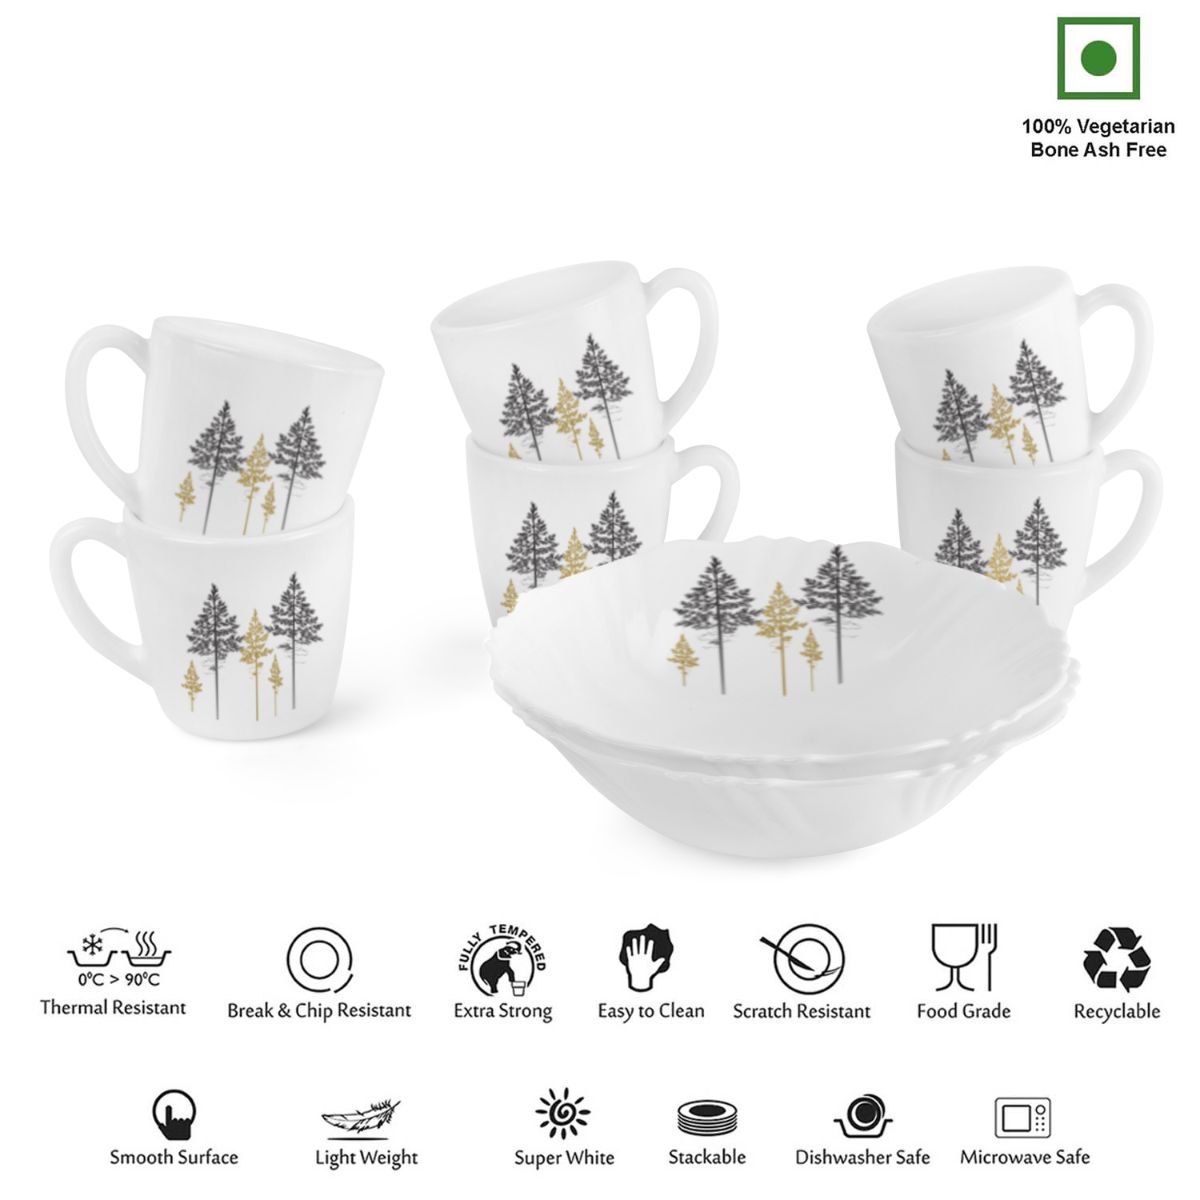 Imperial Series Quick Bite Bowl & Mug Gift set, 8 Pieces Golden Pine / 8 Pieces